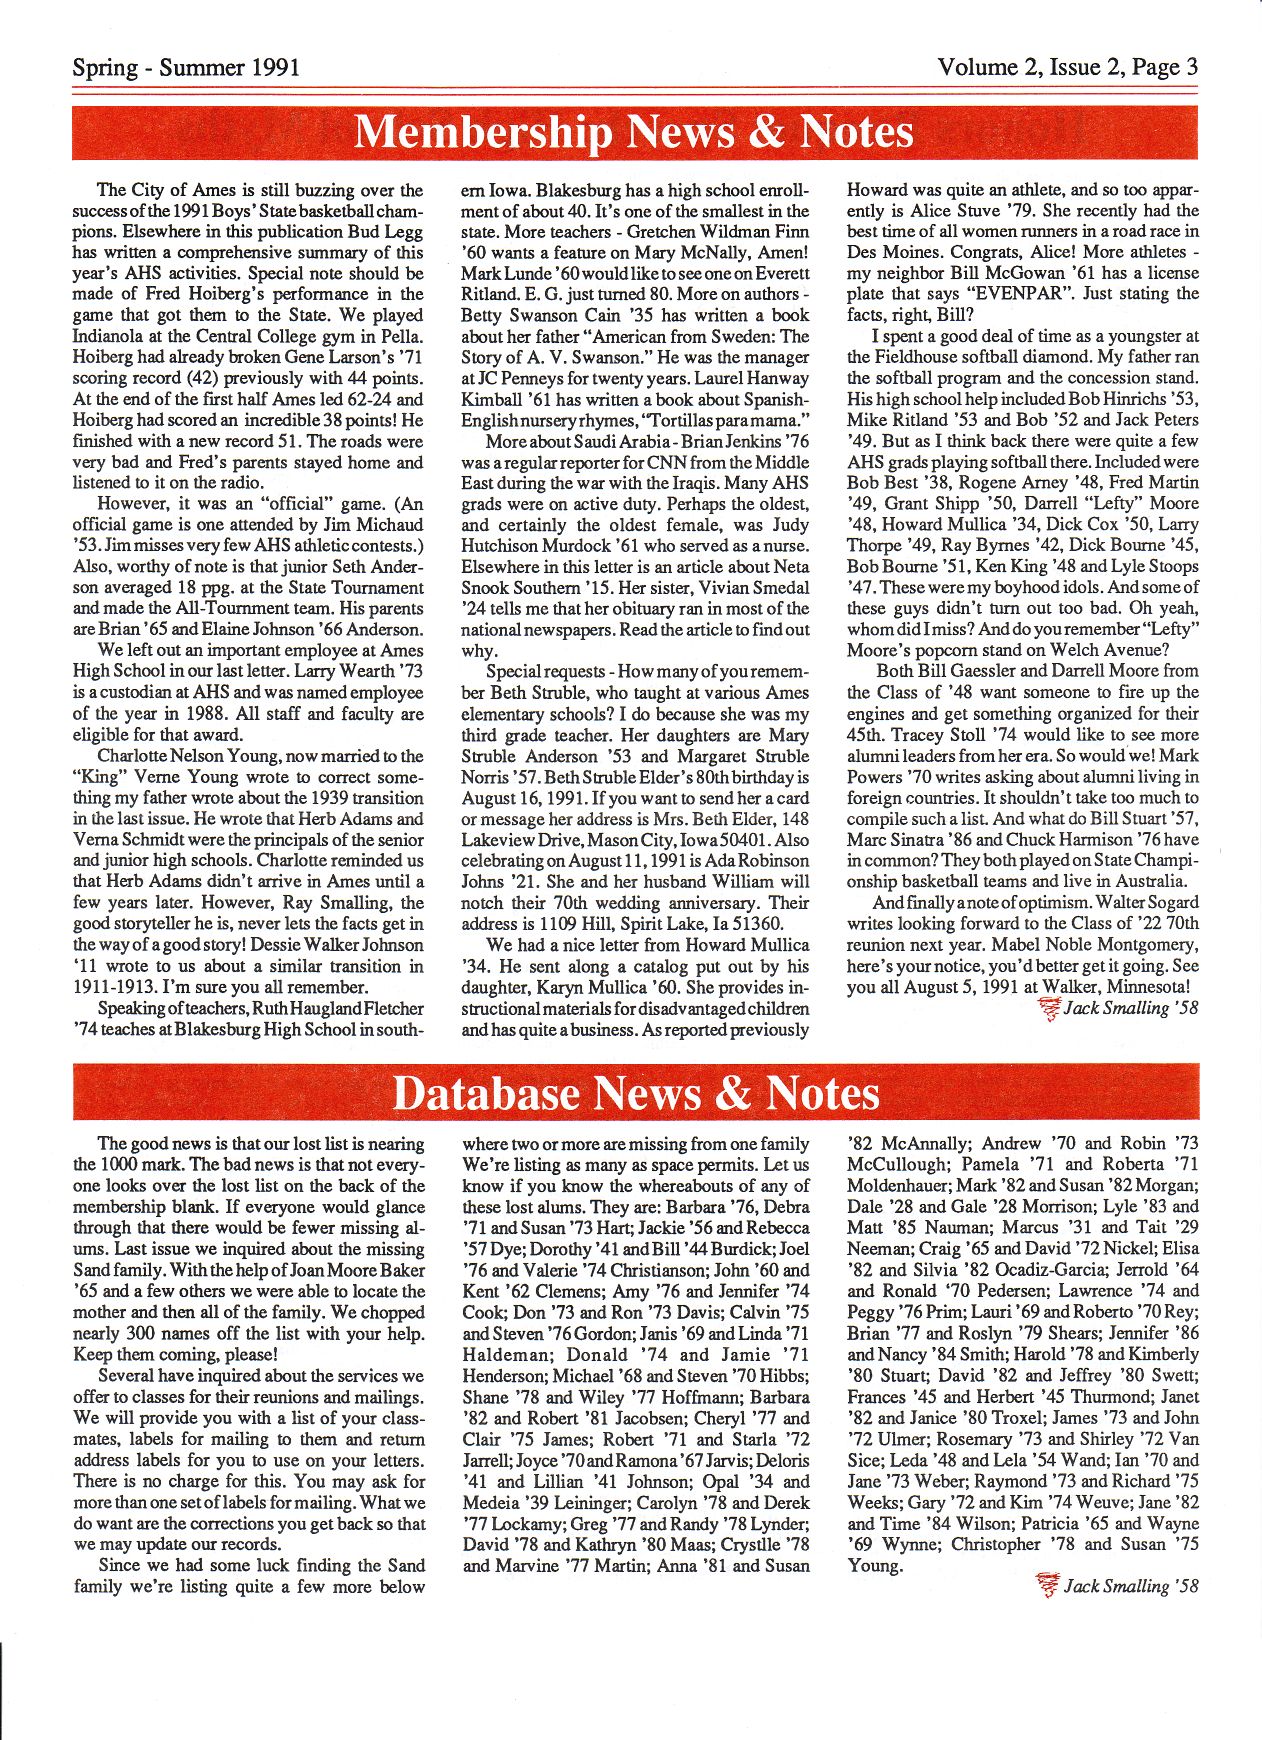 1991 page 3 Ames High School Alumni Assoc. spring-summer newsletter volume 2 issue 2